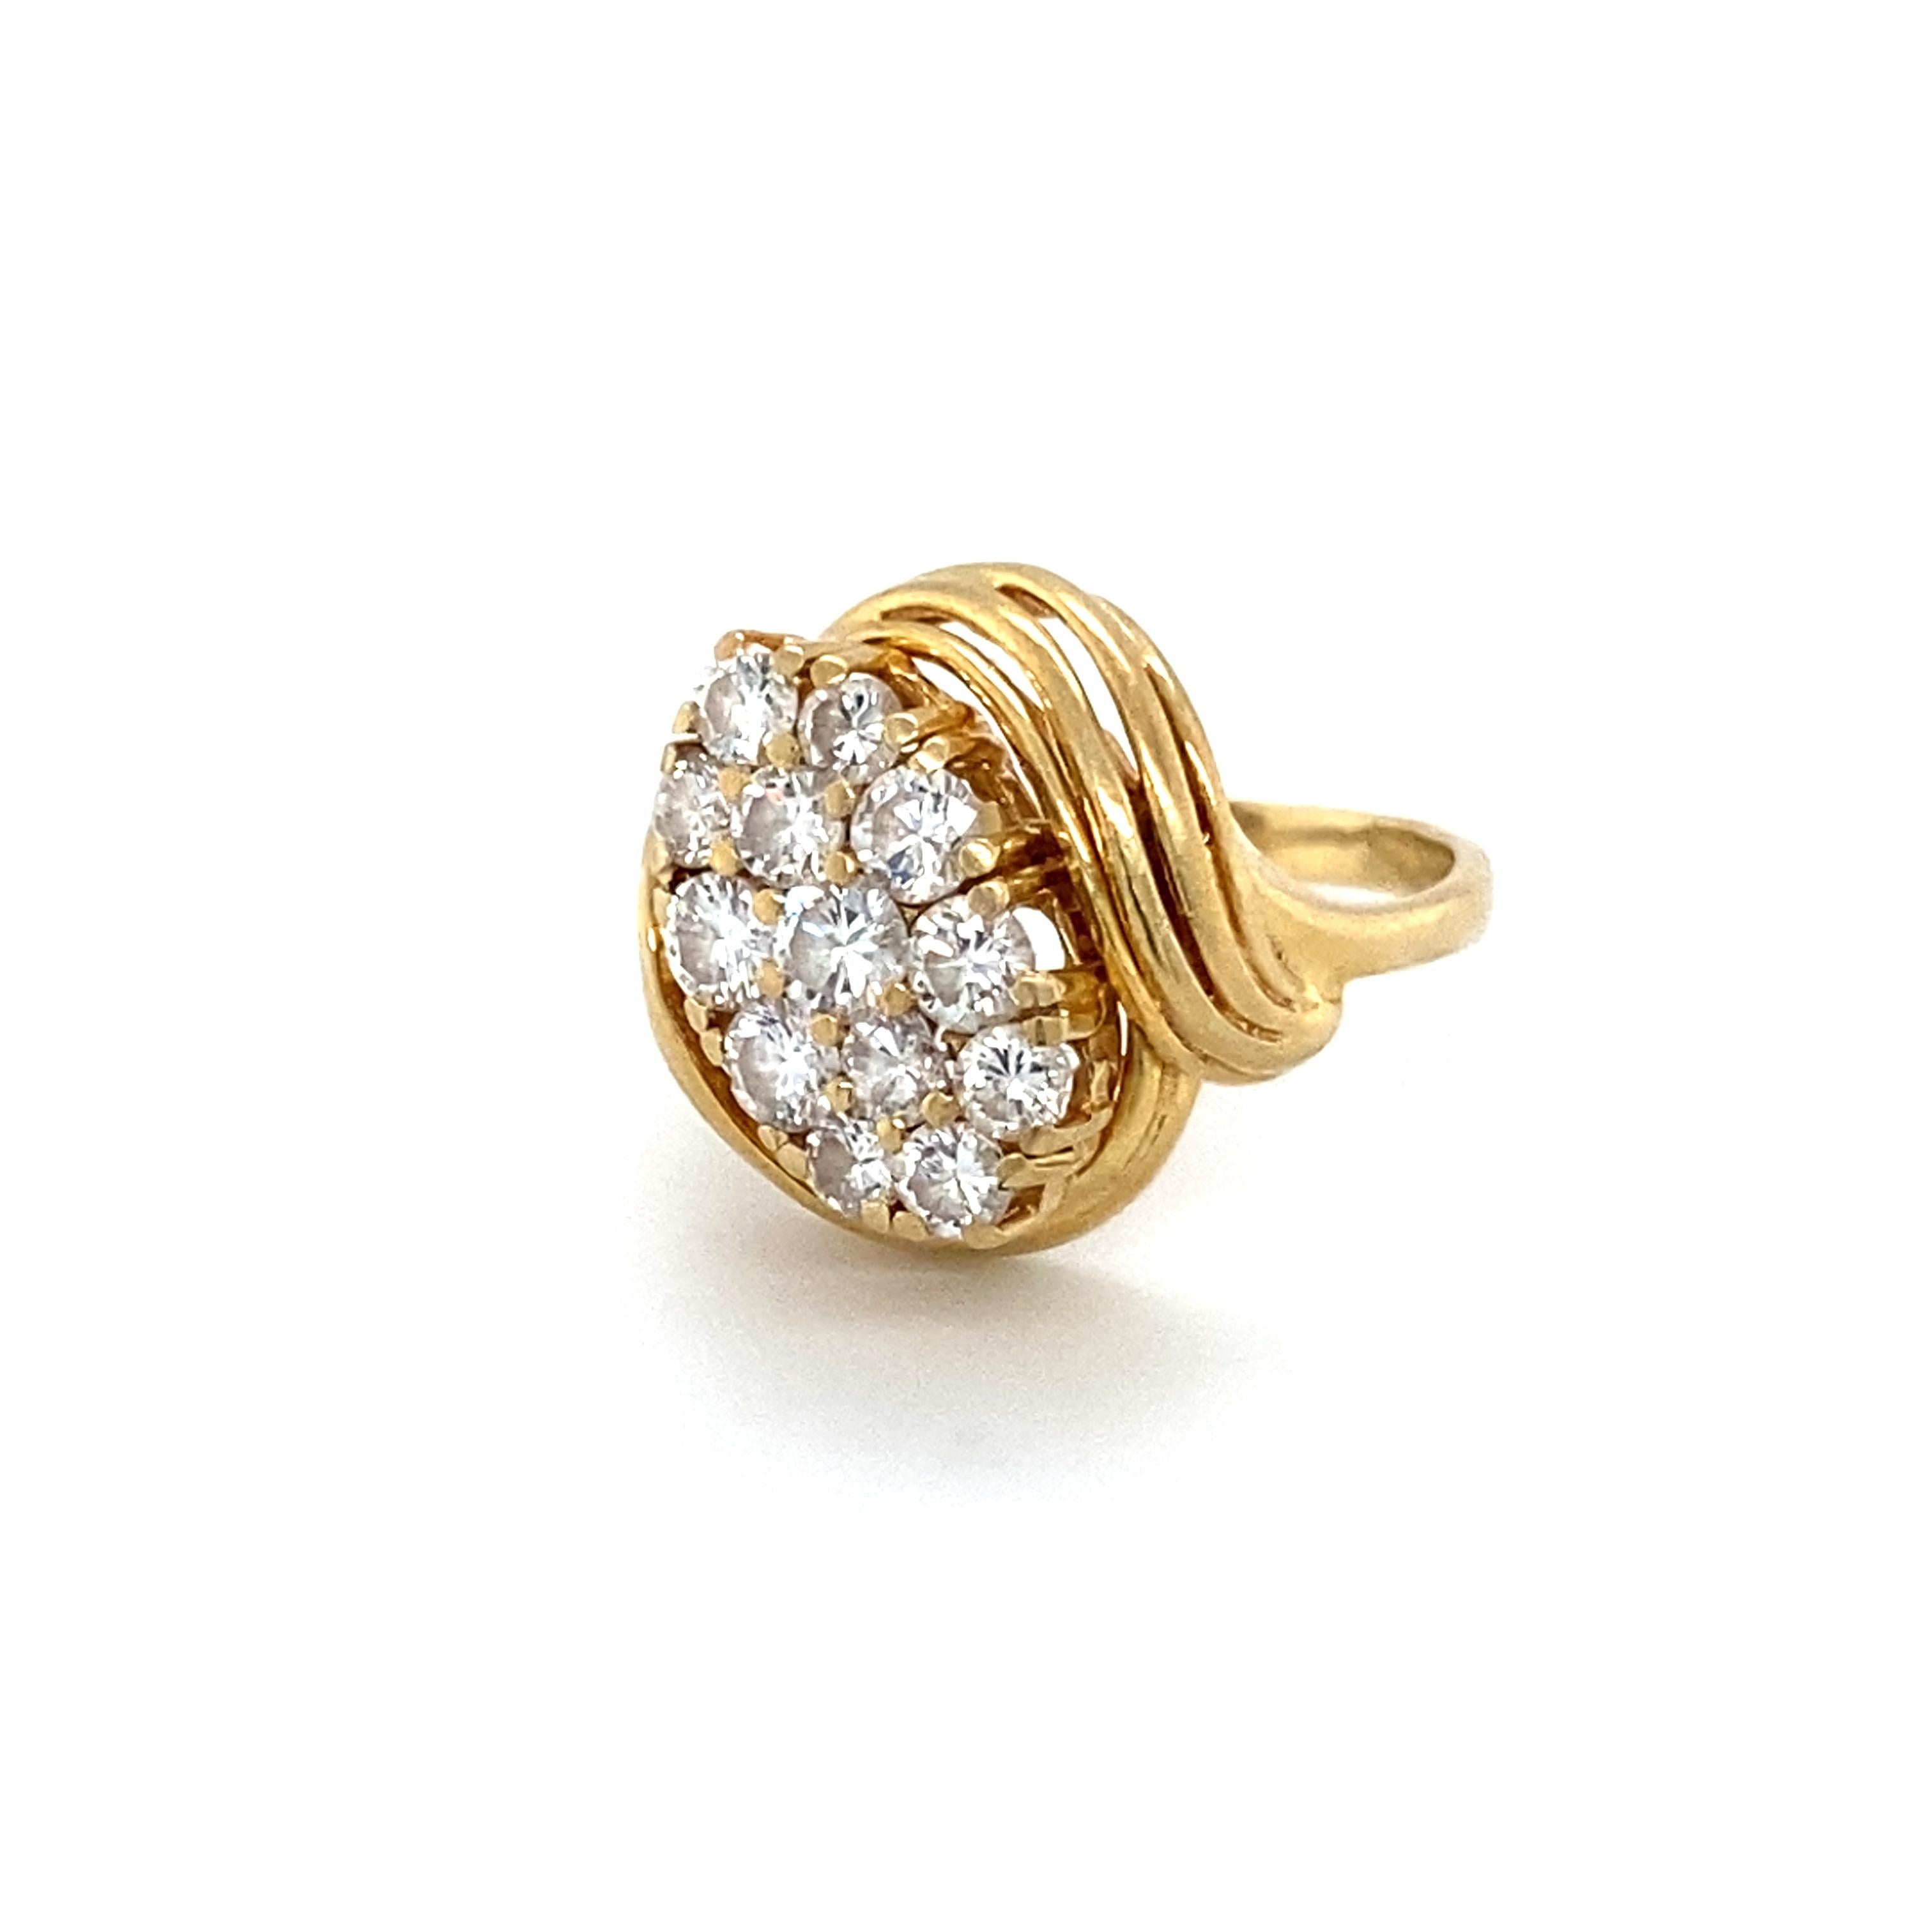 Item Details: 
Ring Size: 3.25, sizable
Metal Type: 14 karat yellow gold
Weight: 4.4 grams

Diamond Details:
Cut:  Round
Carat: 0.60 Carat
Color: G-H
Clarity: VS-SI

Item Features:
0.60 carat round diamonds
14 Karat yellow gold setting
Ring is